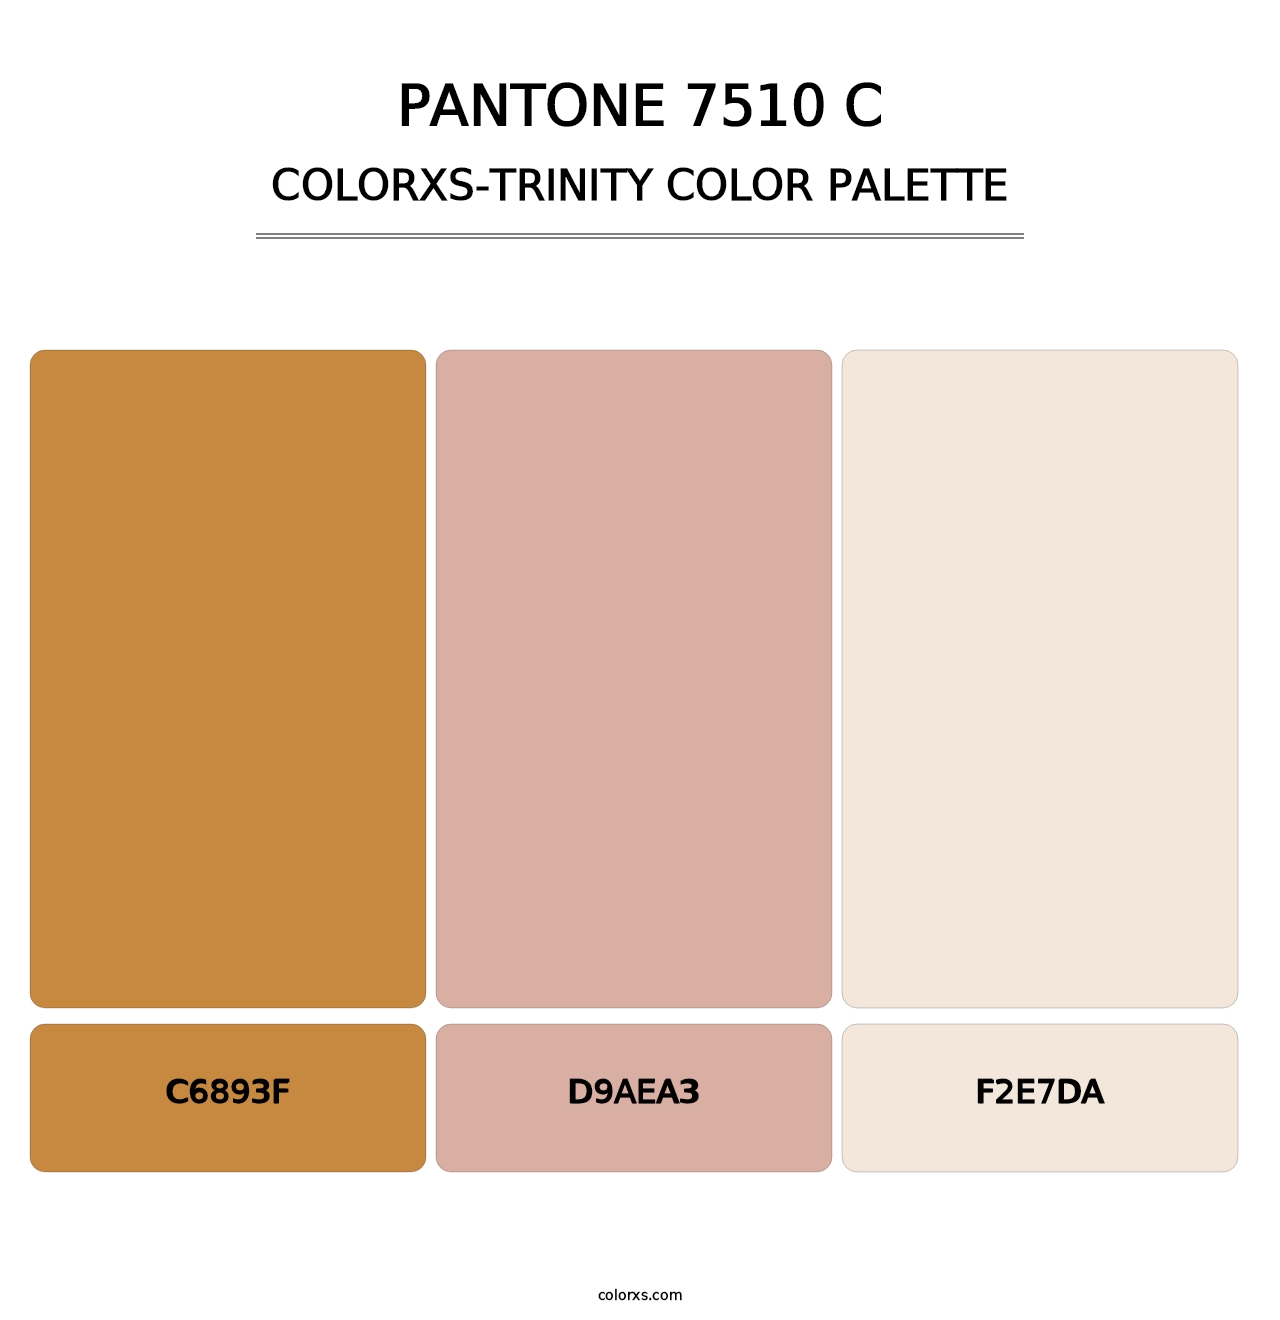 PANTONE 7510 C - Colorxs Trinity Palette